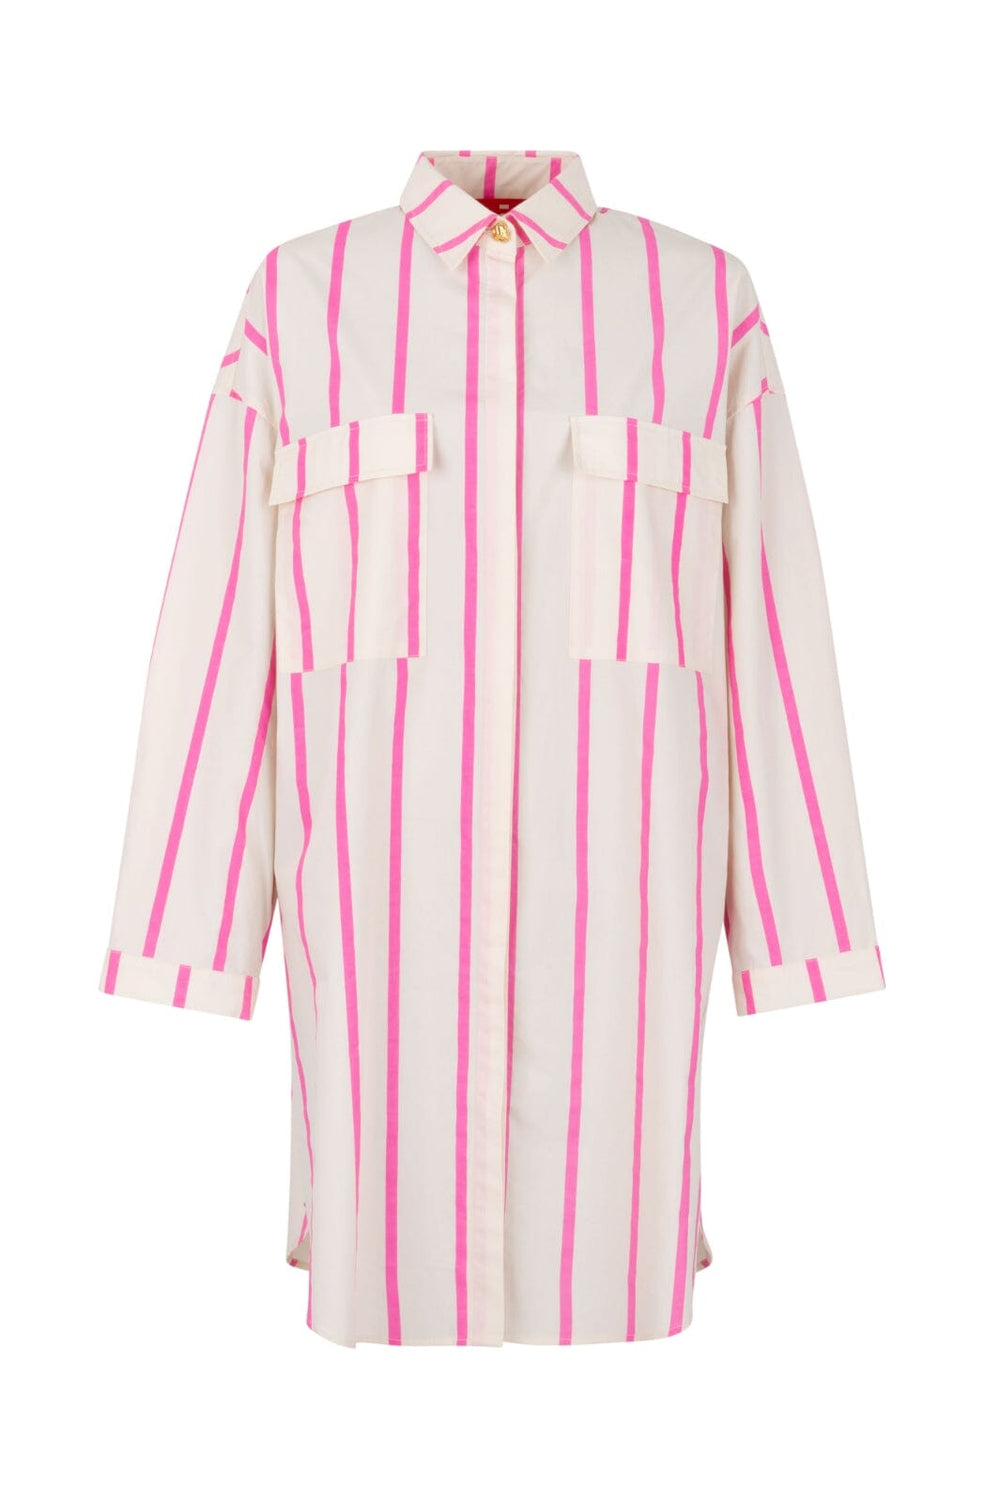 Cras - Flaxcras Shirt - 4006 Pink Stripe 